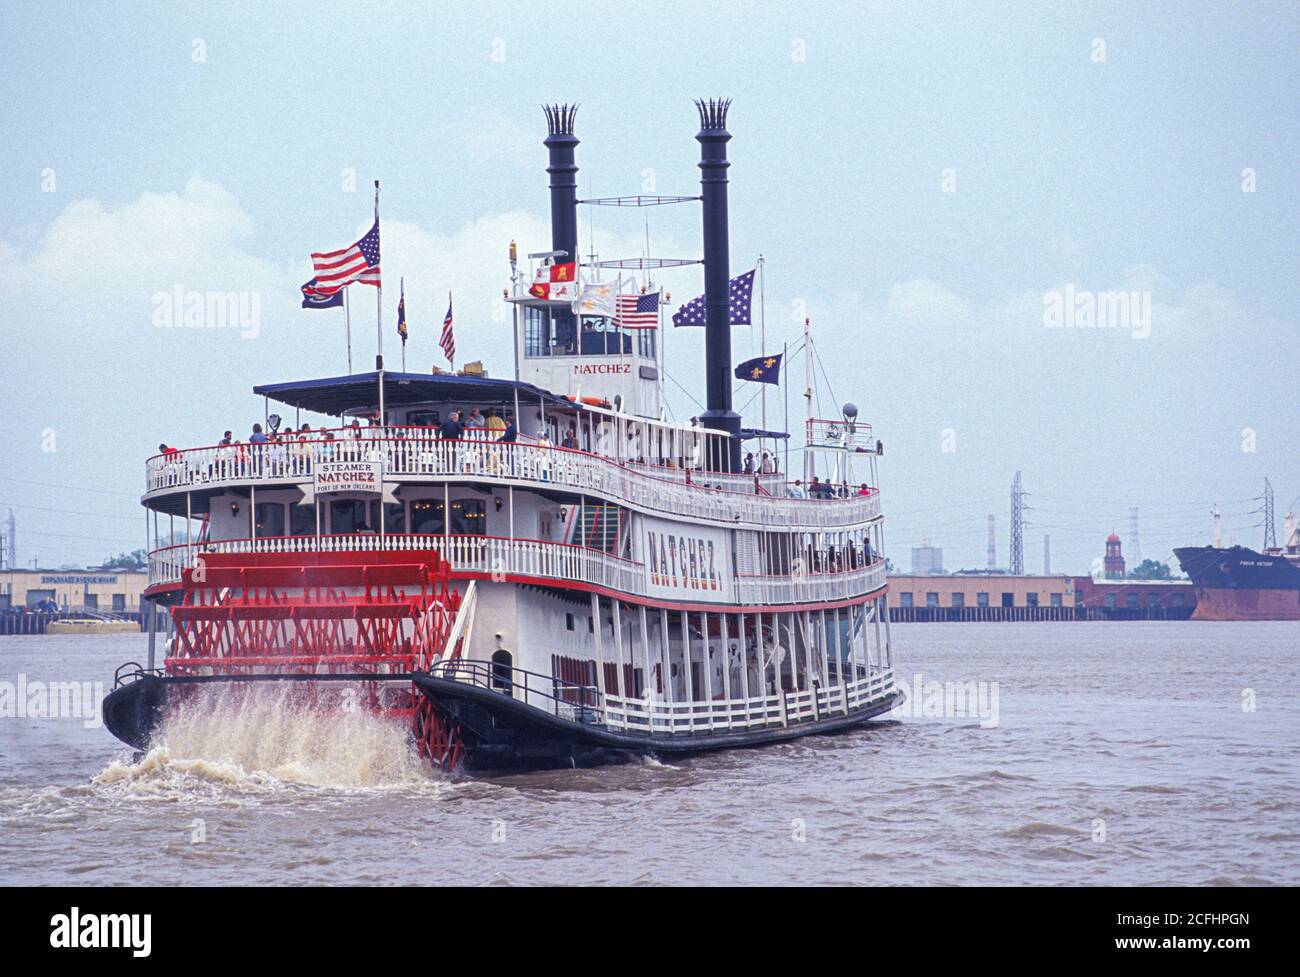 Sternwheeler Steam Boat Natchez, Mississippi River, New Orleans, Louisiana, USA Stock Photo